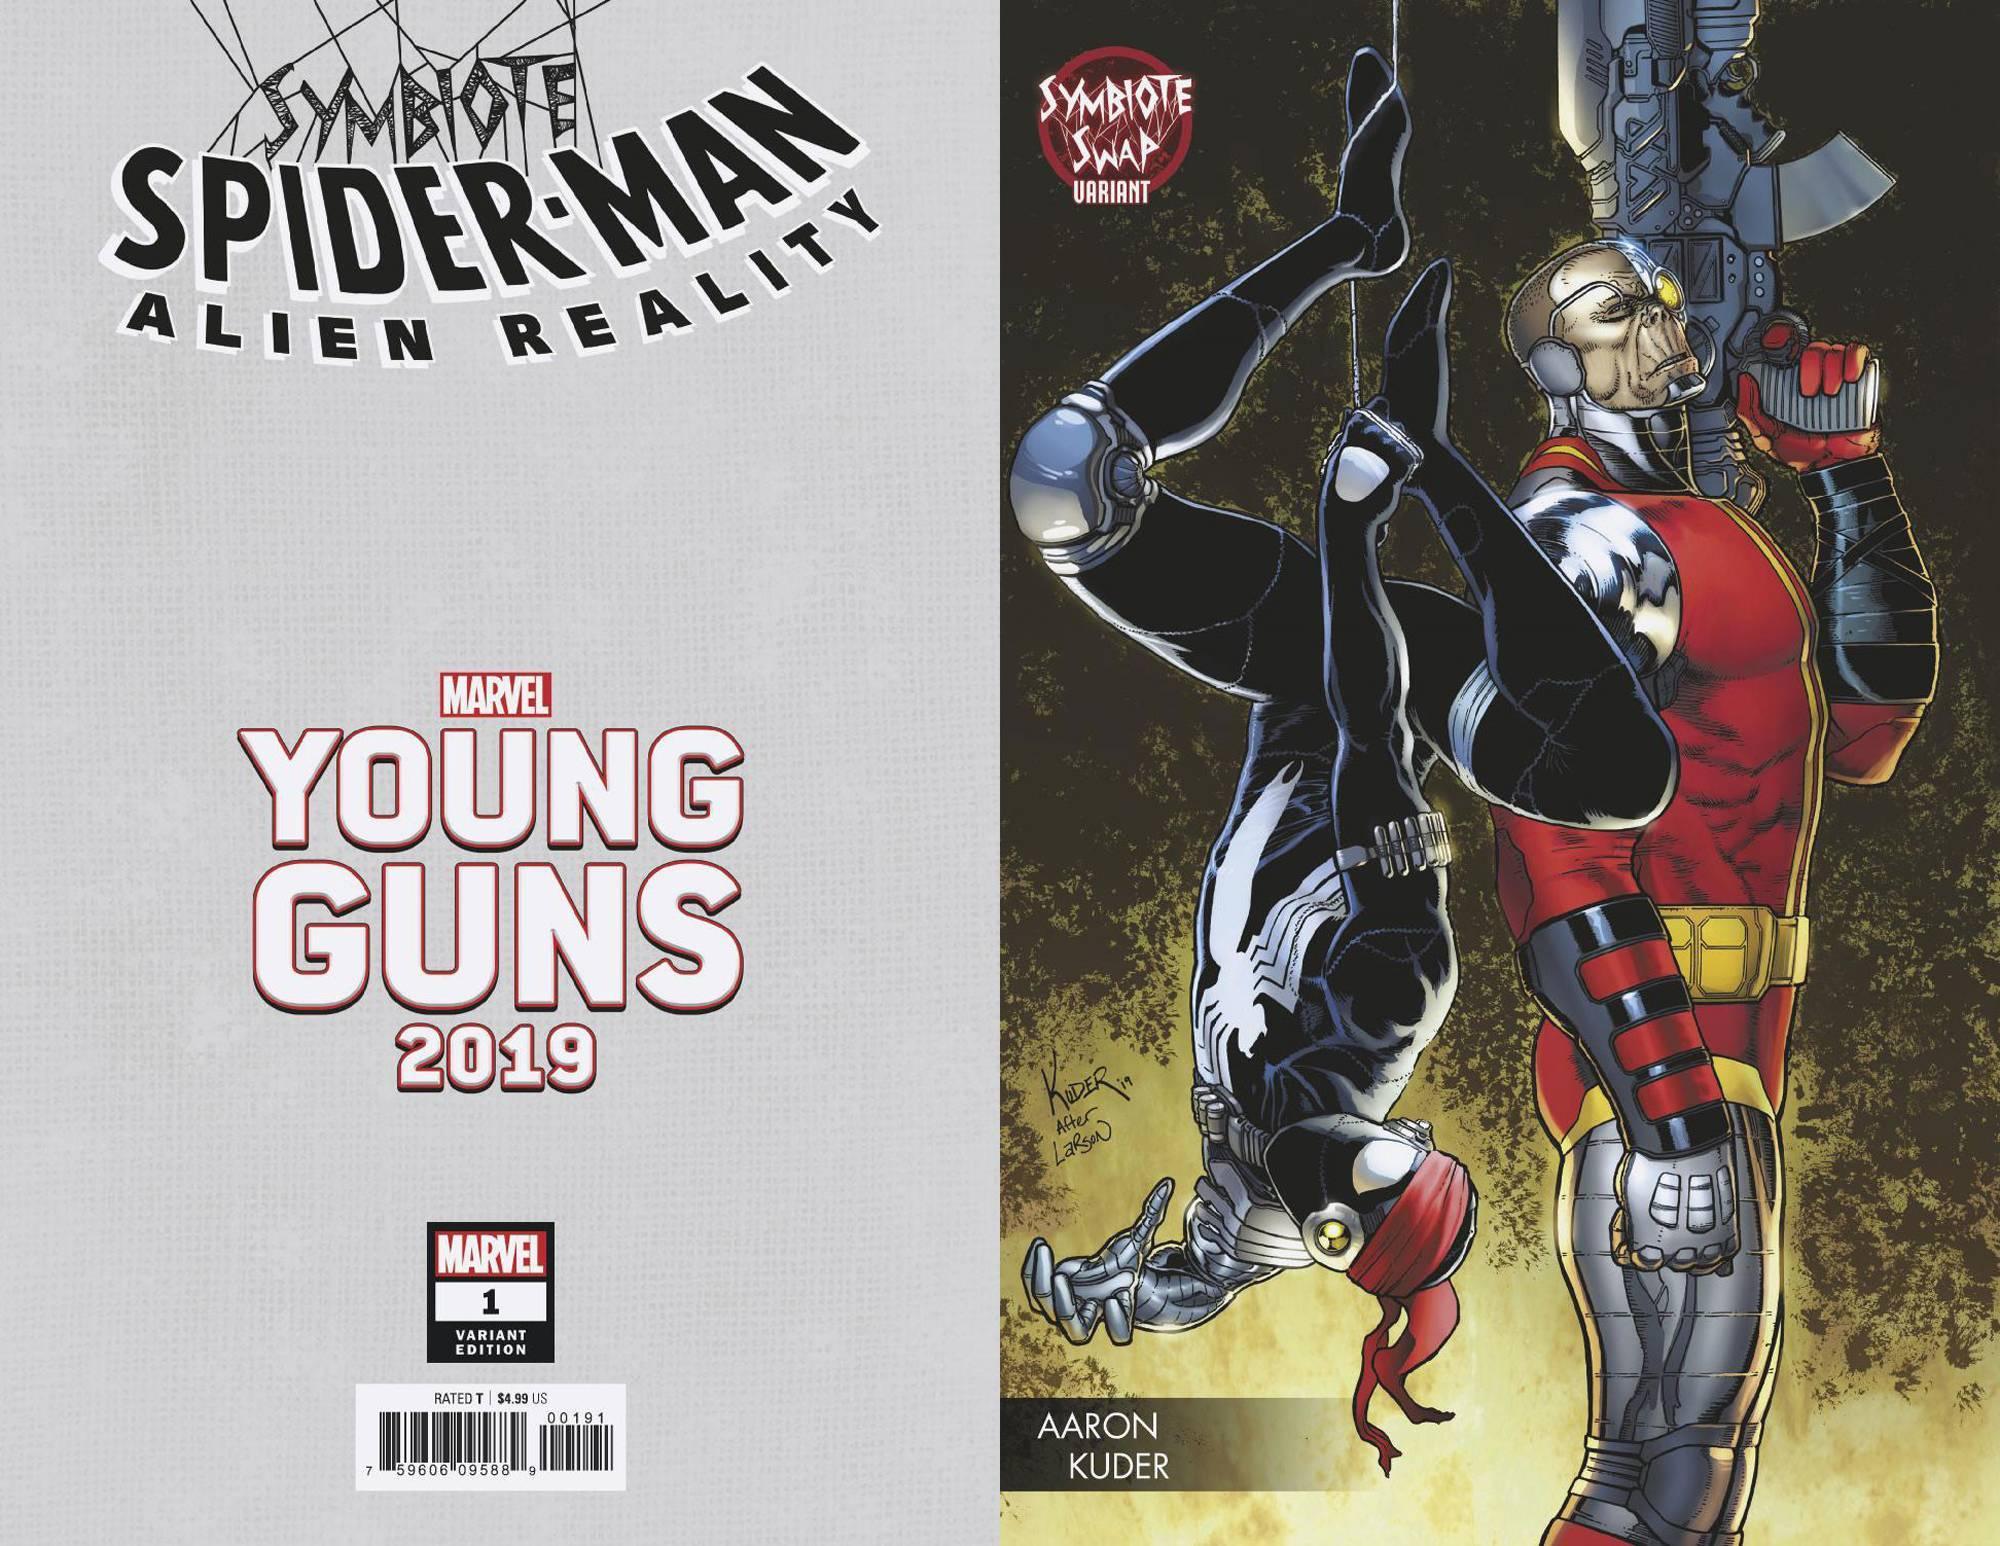 SYMBIOTE SPIDER-MAN ALIEN REALITY #1 KUDER YOUNG GUNS VAR - Kings Comics